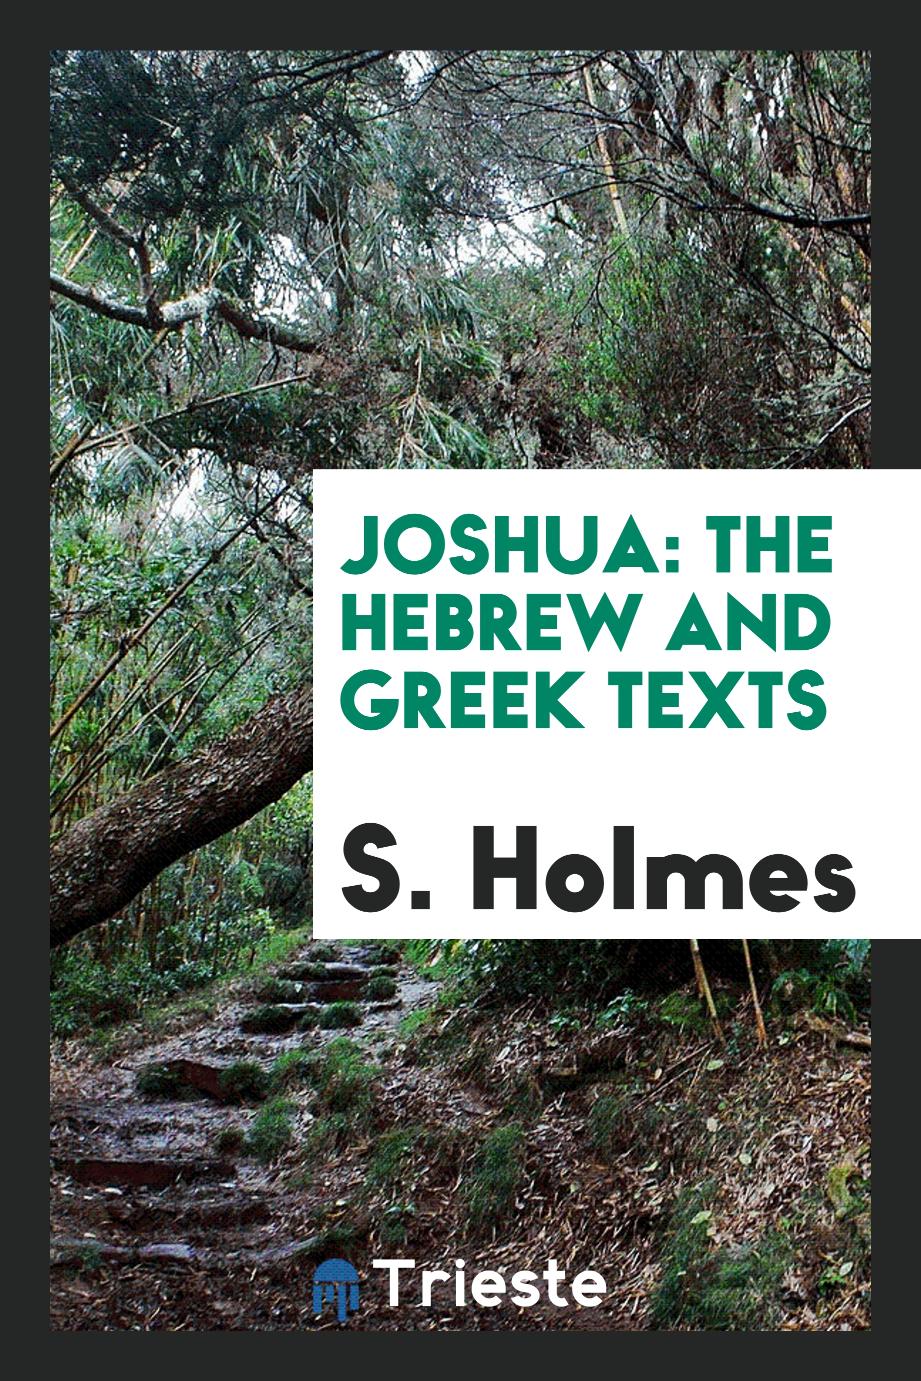 Joshua: the Hebrew and Greek texts